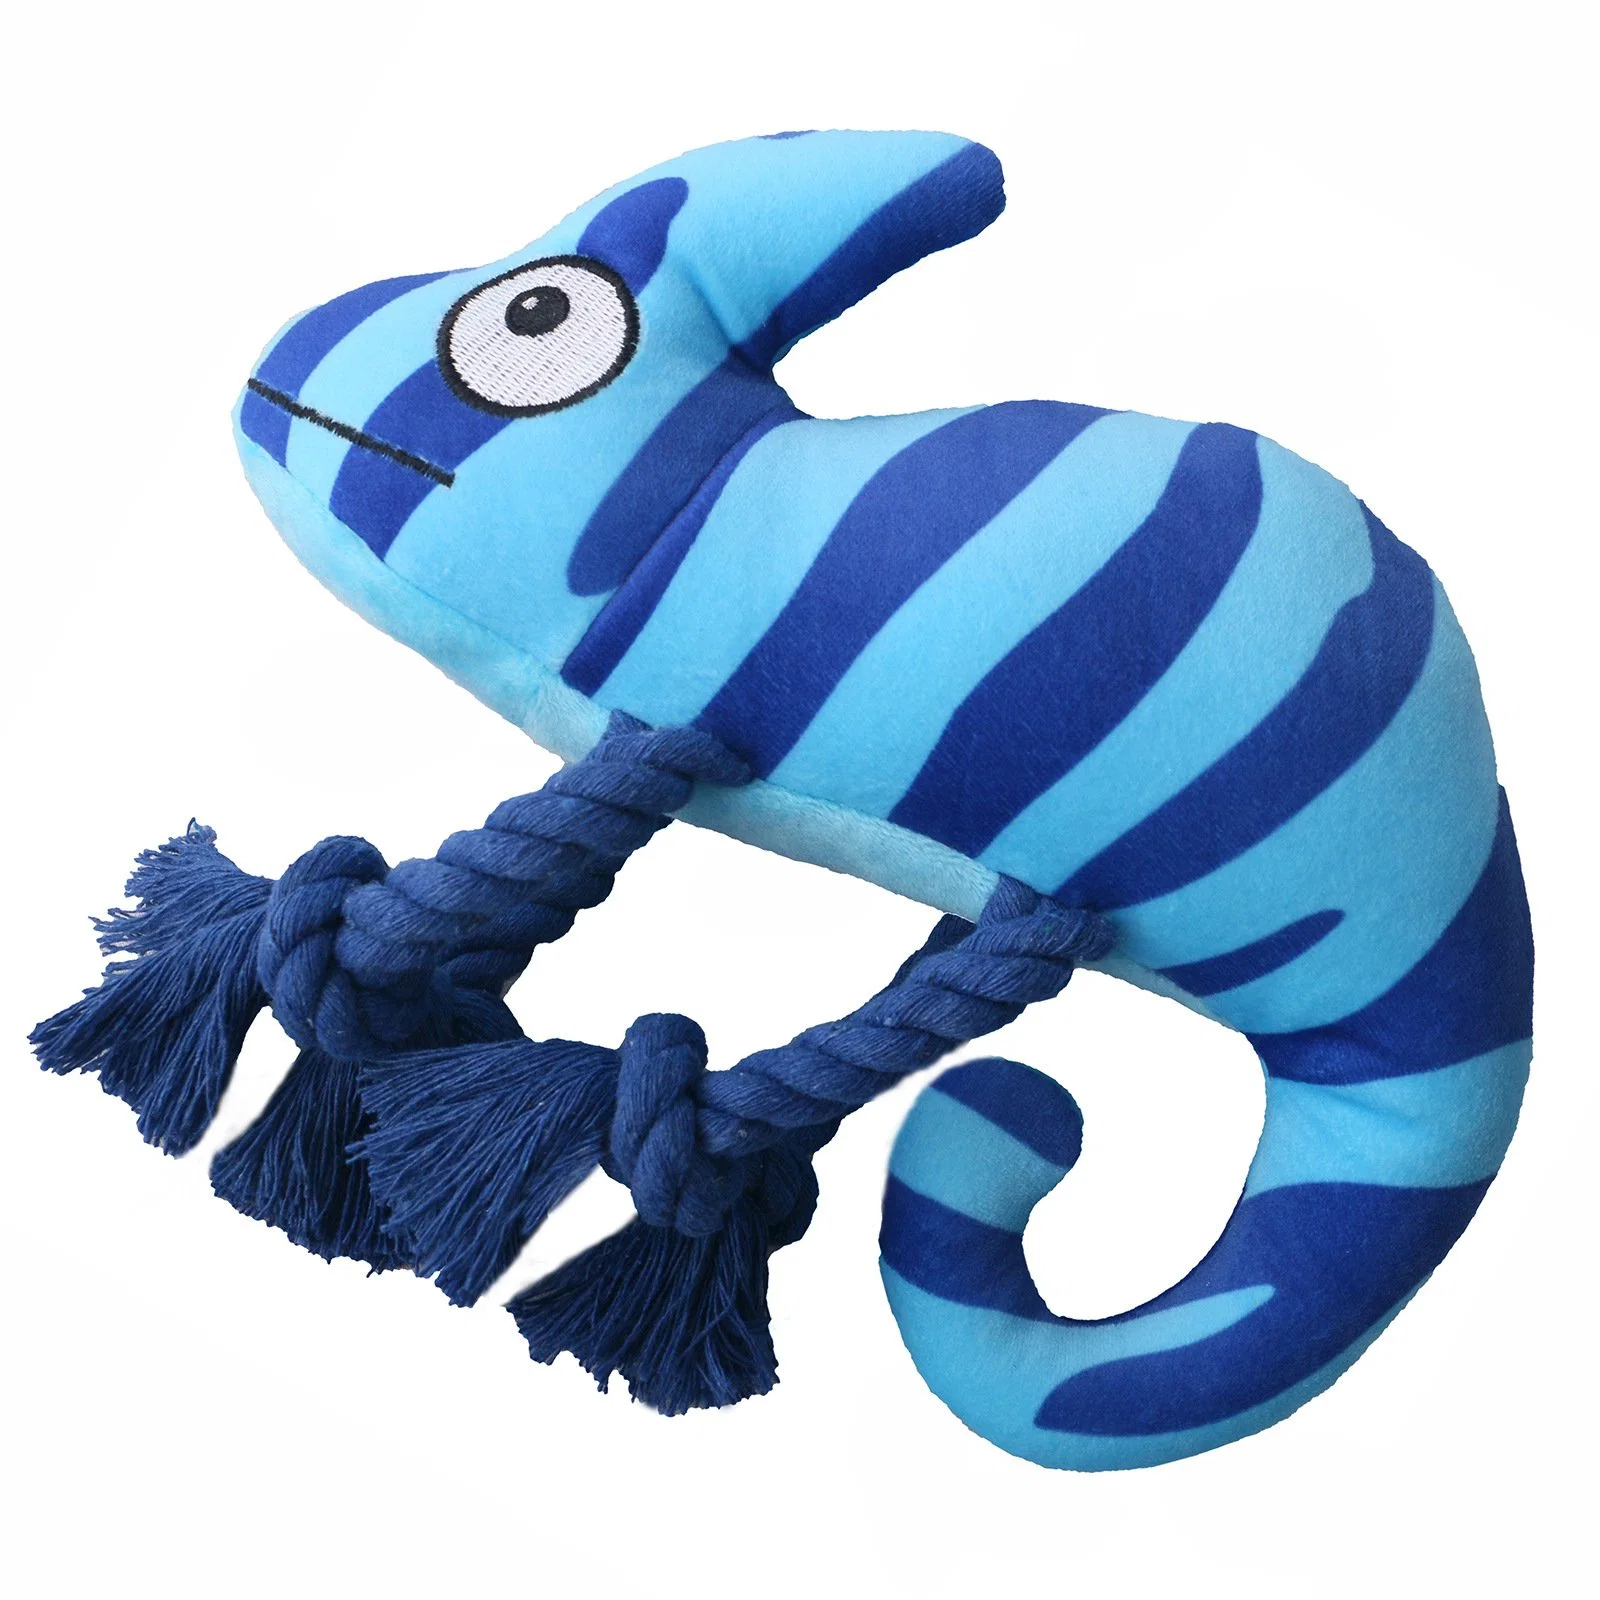 Chameleon Pet Plush Toys Squeaker Crinkle Wholesale Fashion Stuffed Toys